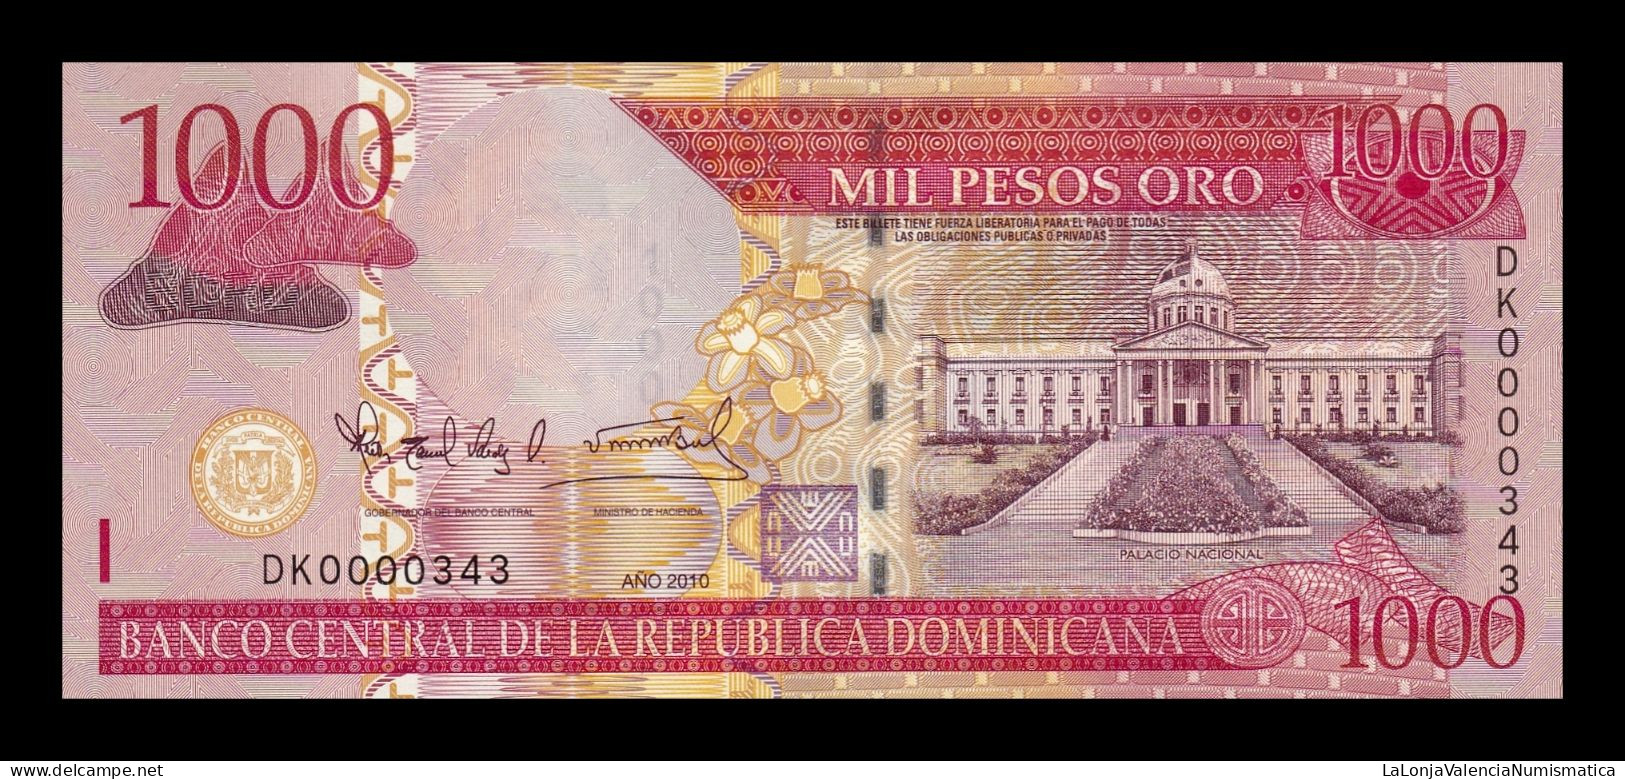 República Dominicana 1000 Pesos Oro 2010 Pick 180c Low Serial 343 Sc Unc - Dominicana